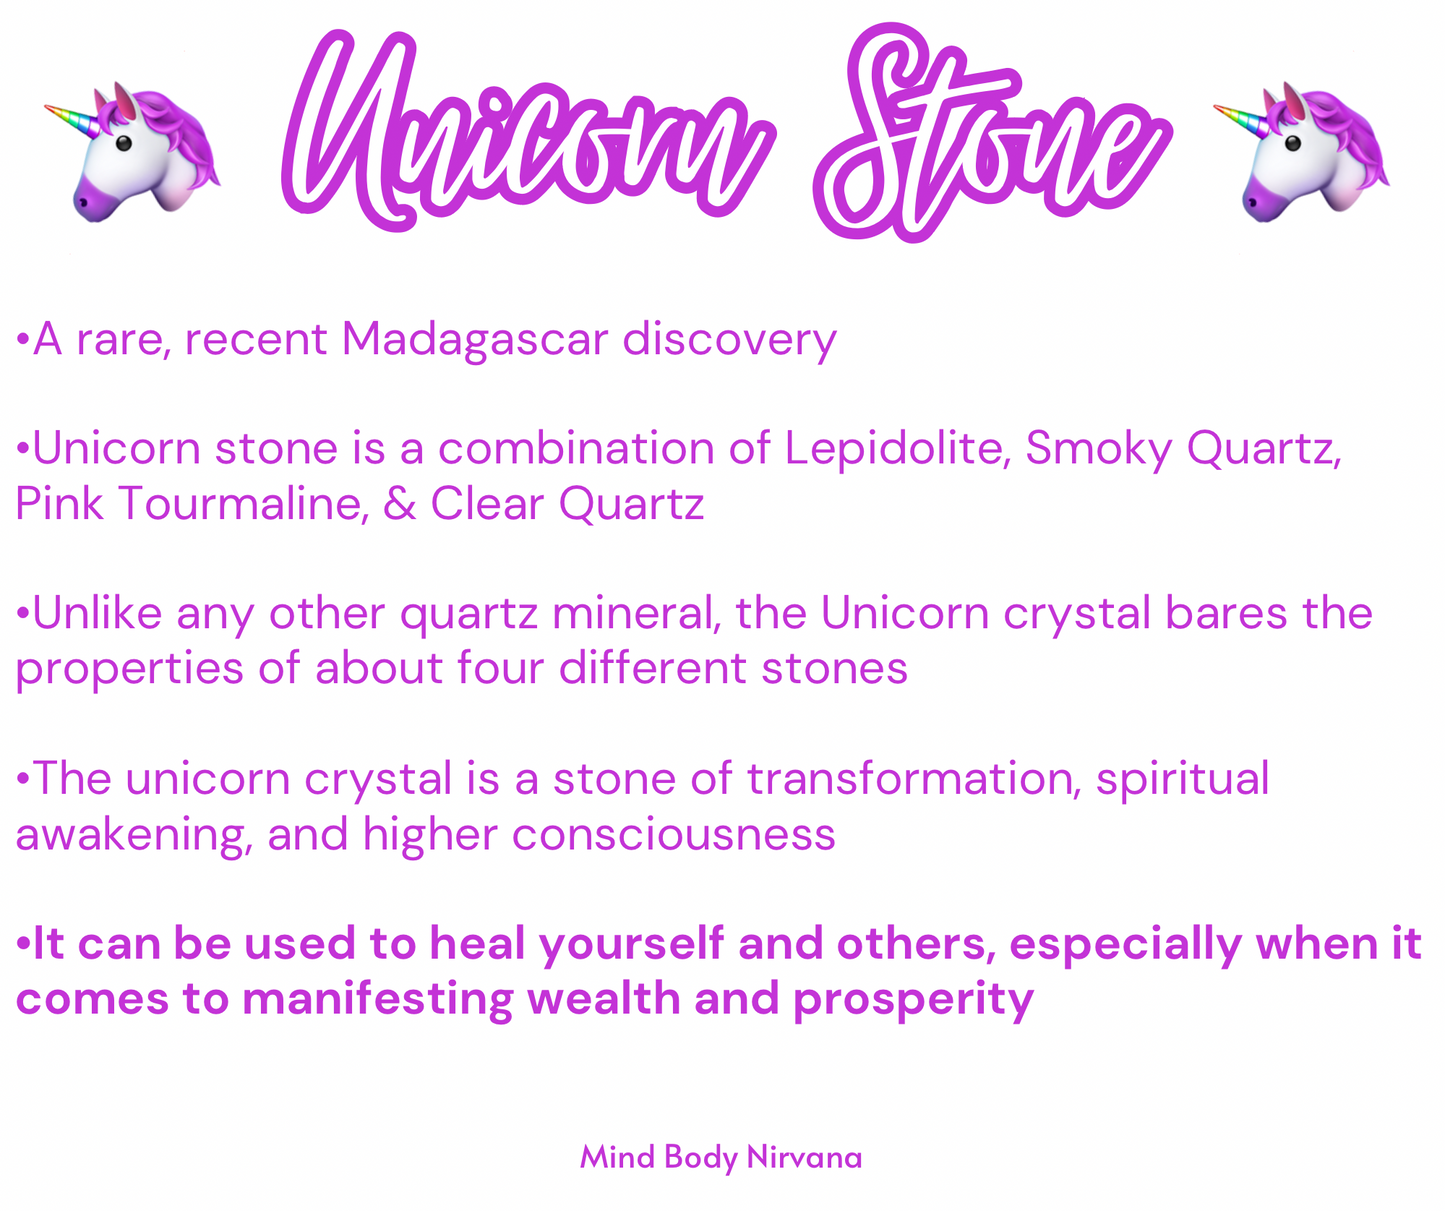 Unicorn Stone